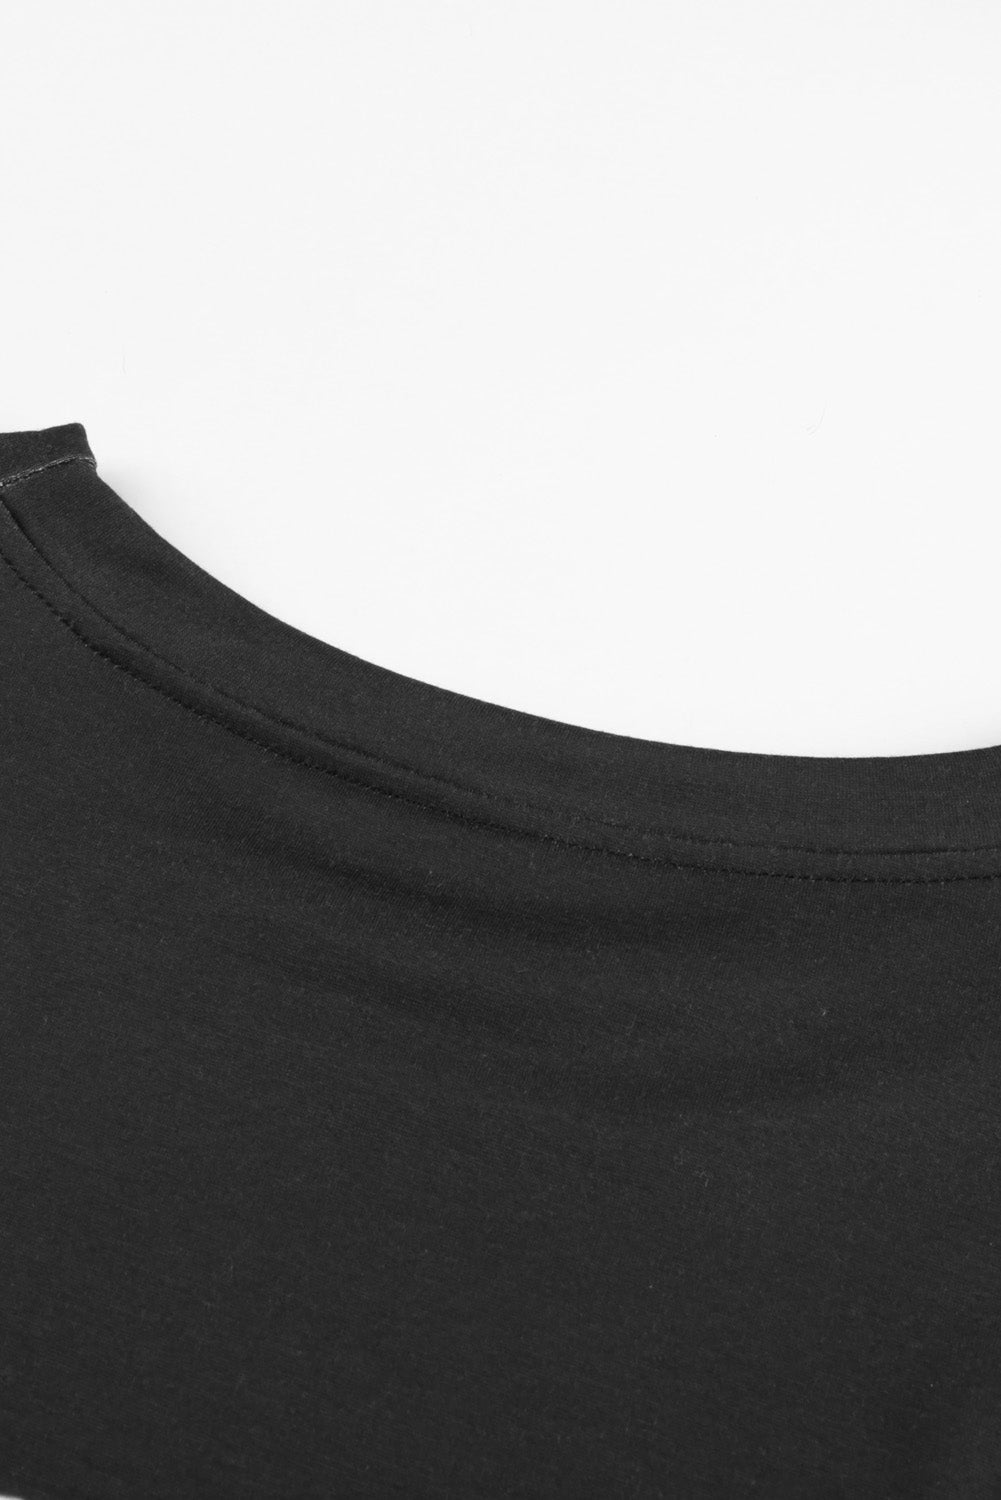 Black Striped Abstract Long Sleeve Casual Sweatshirt